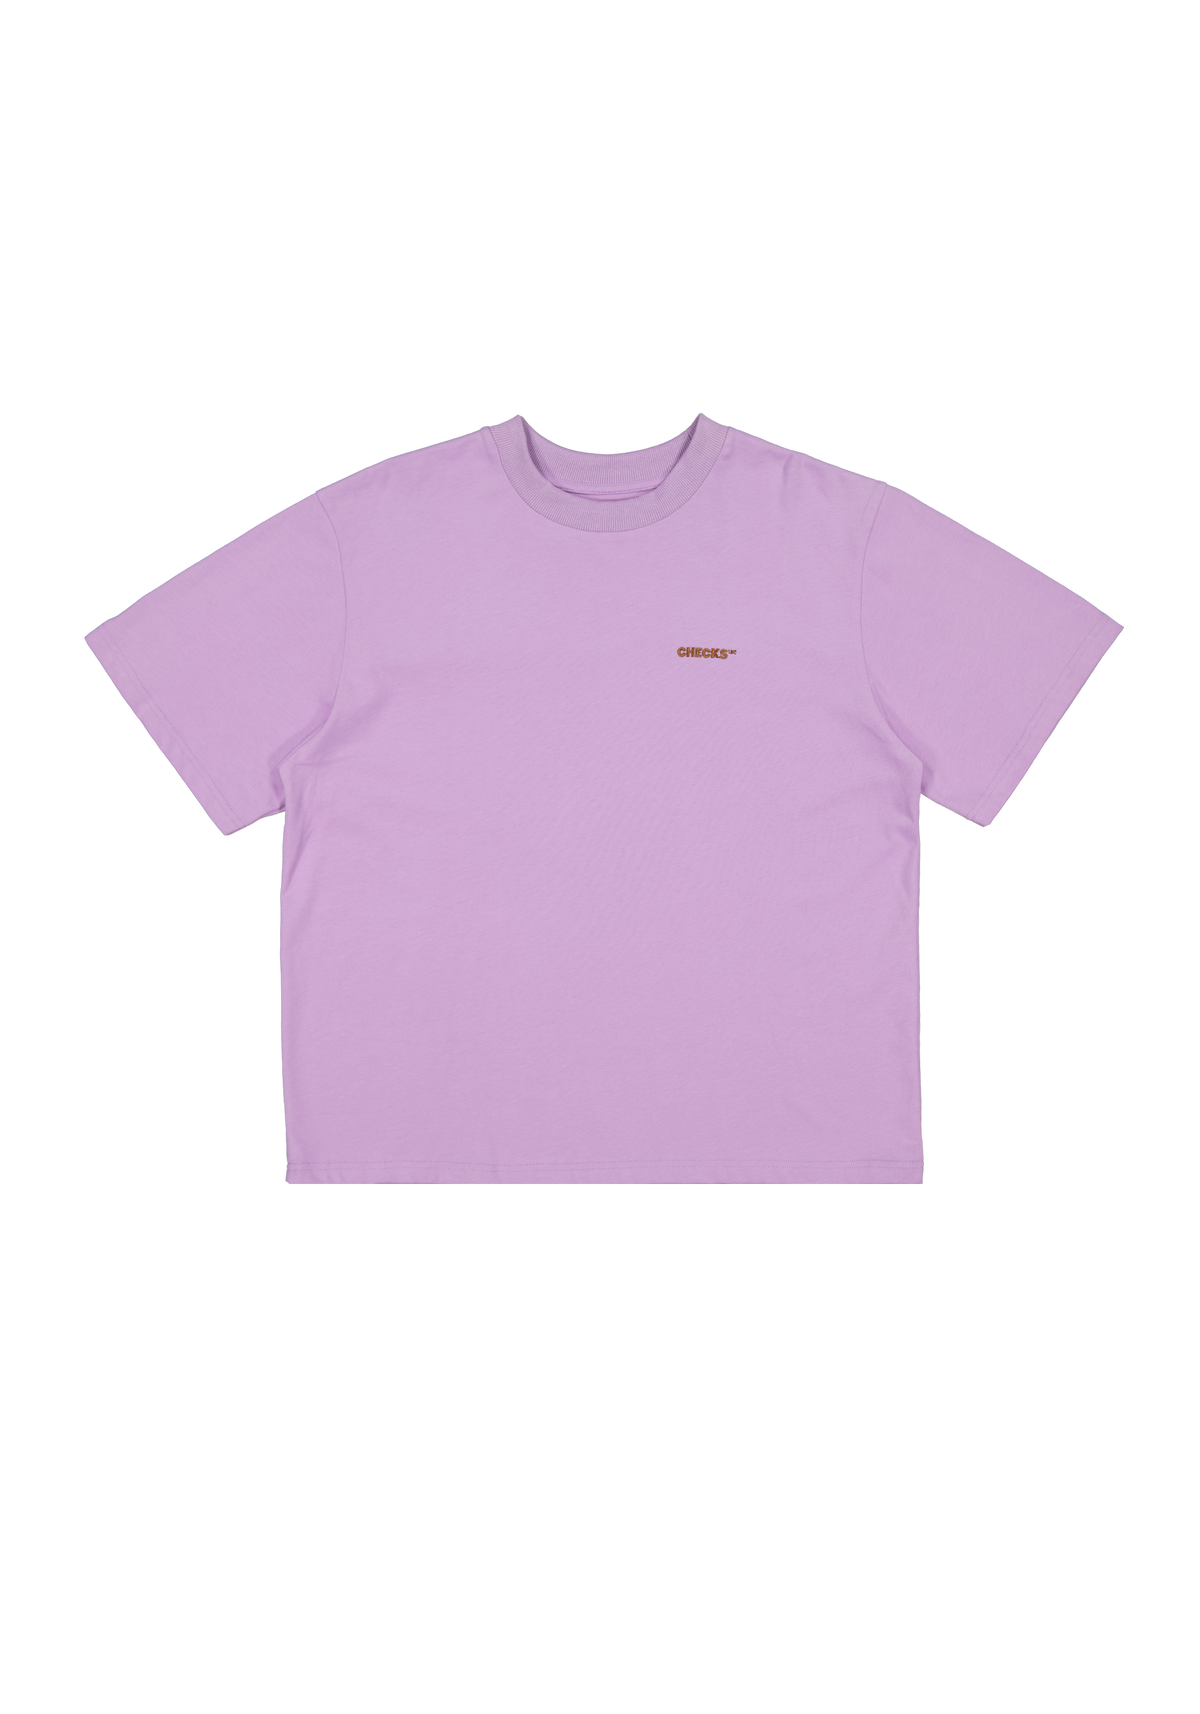 Classic T-shirt Lavender | CHECKS DOWNTOWN